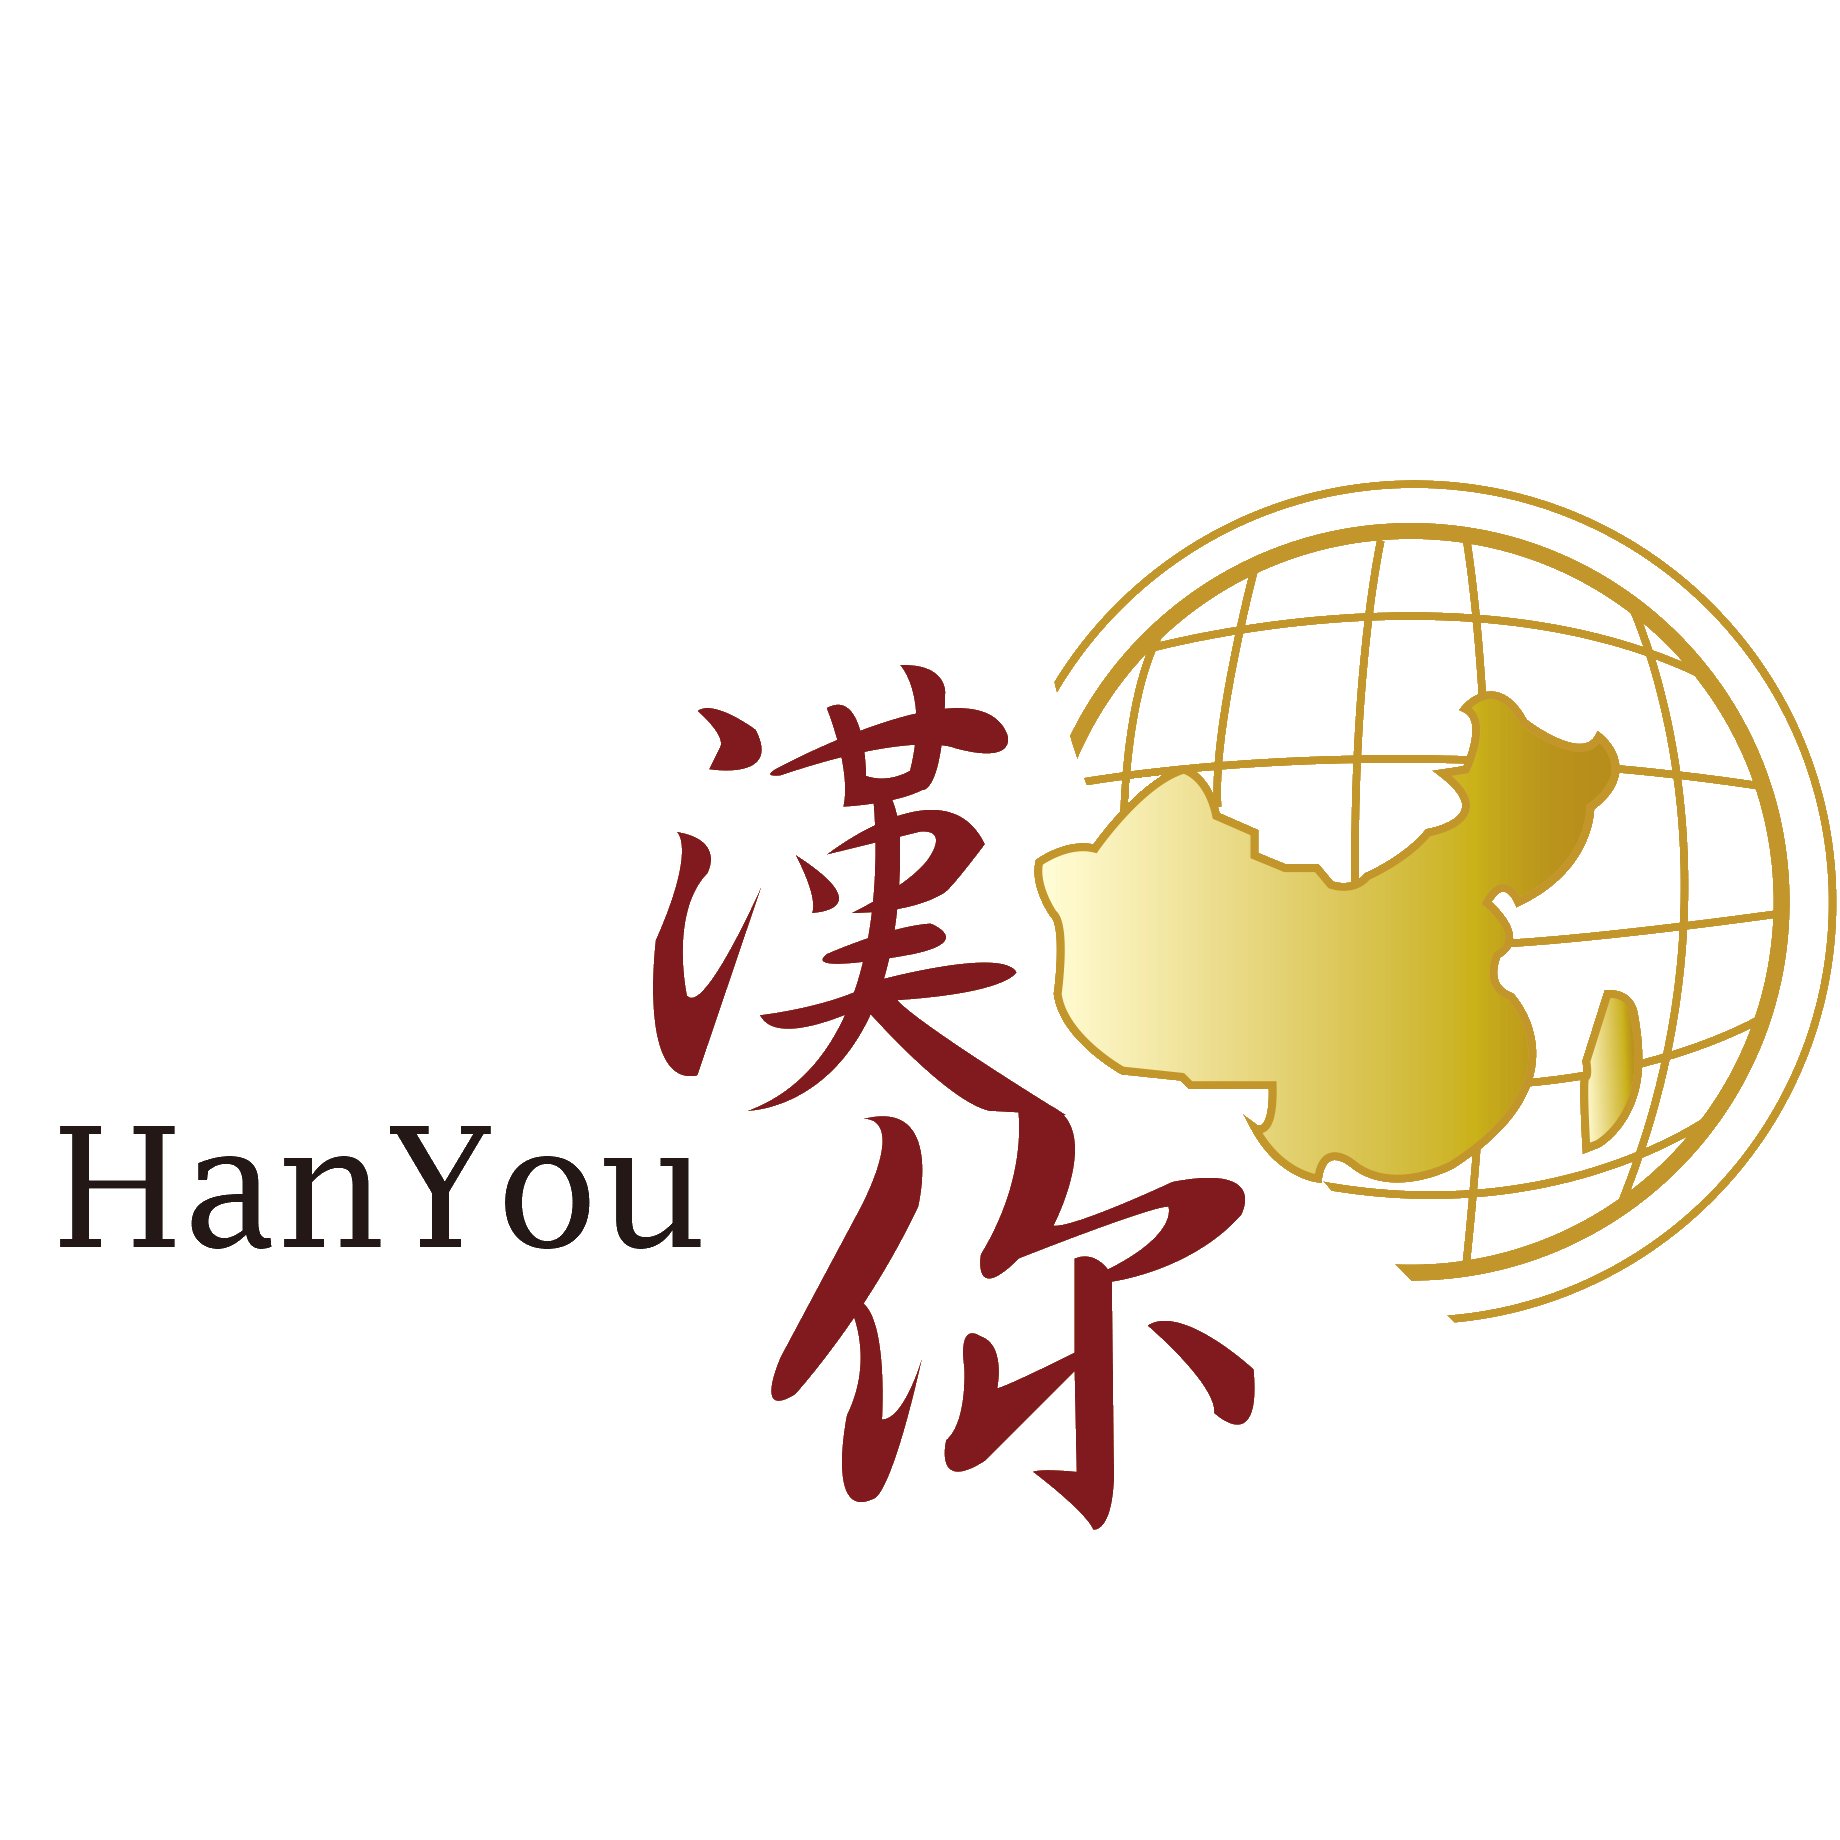 HanYou Chinese Language Institute